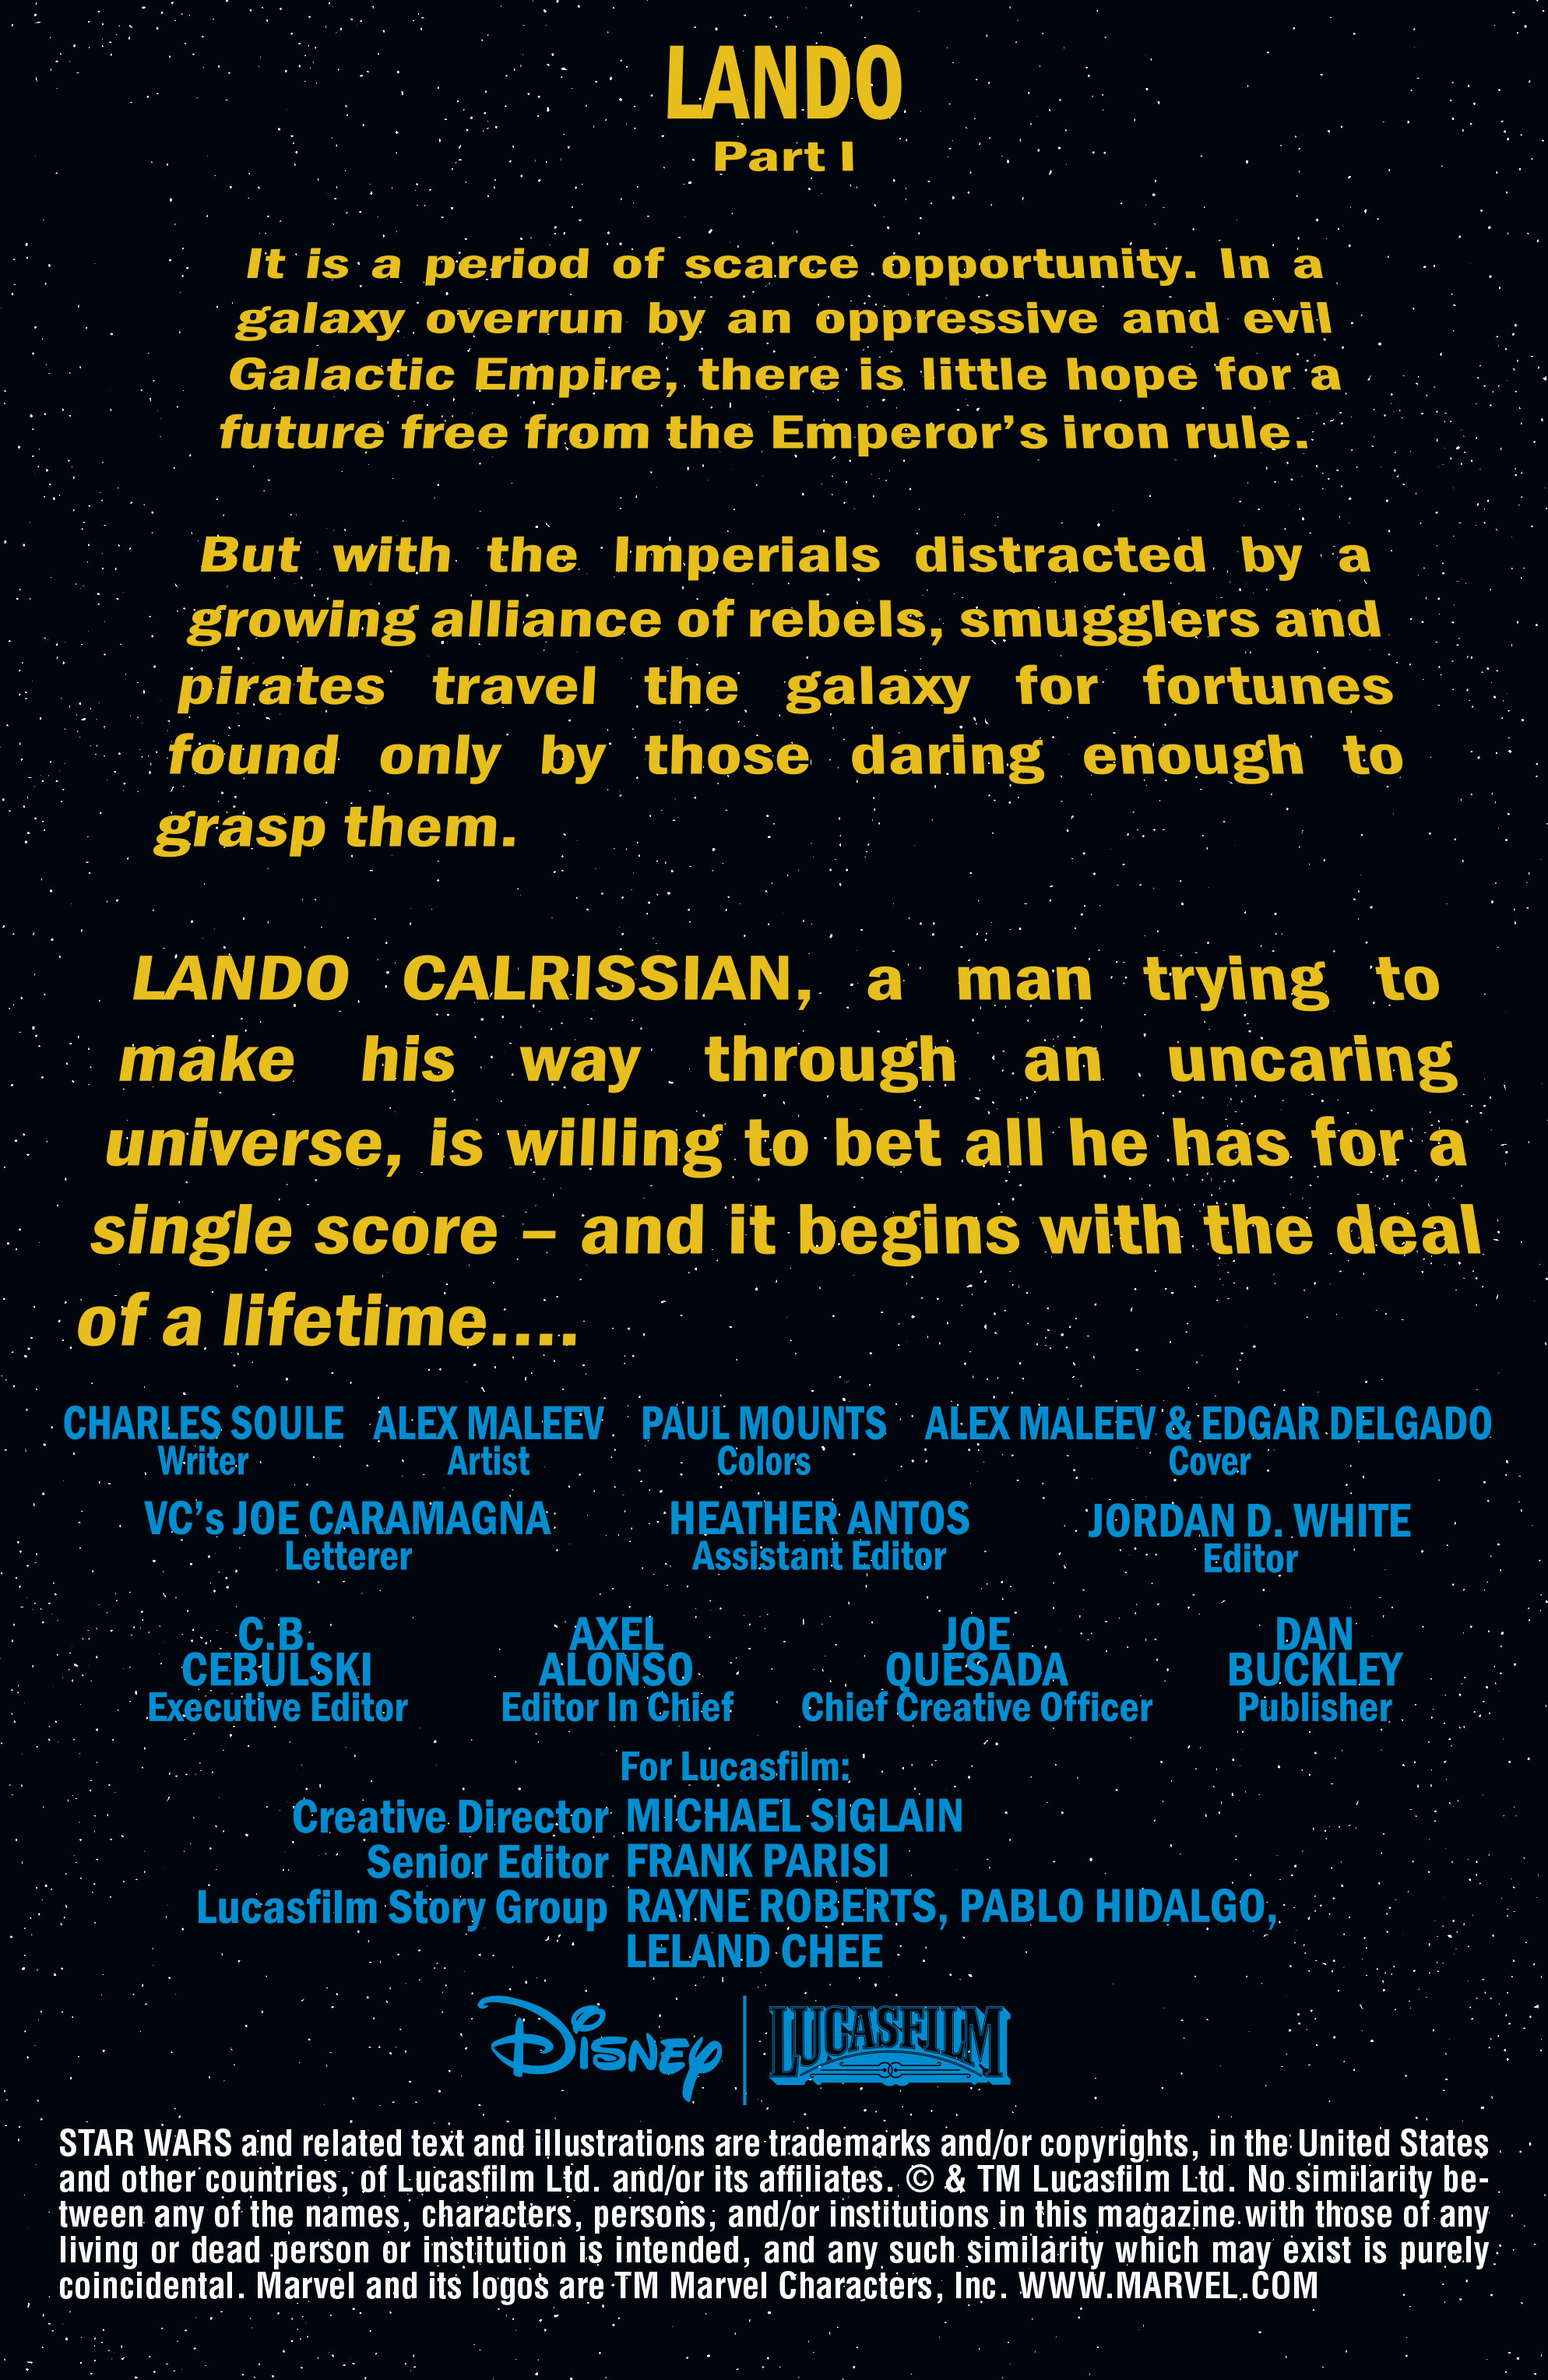 Read online Lando comic -  Issue #1 - 11